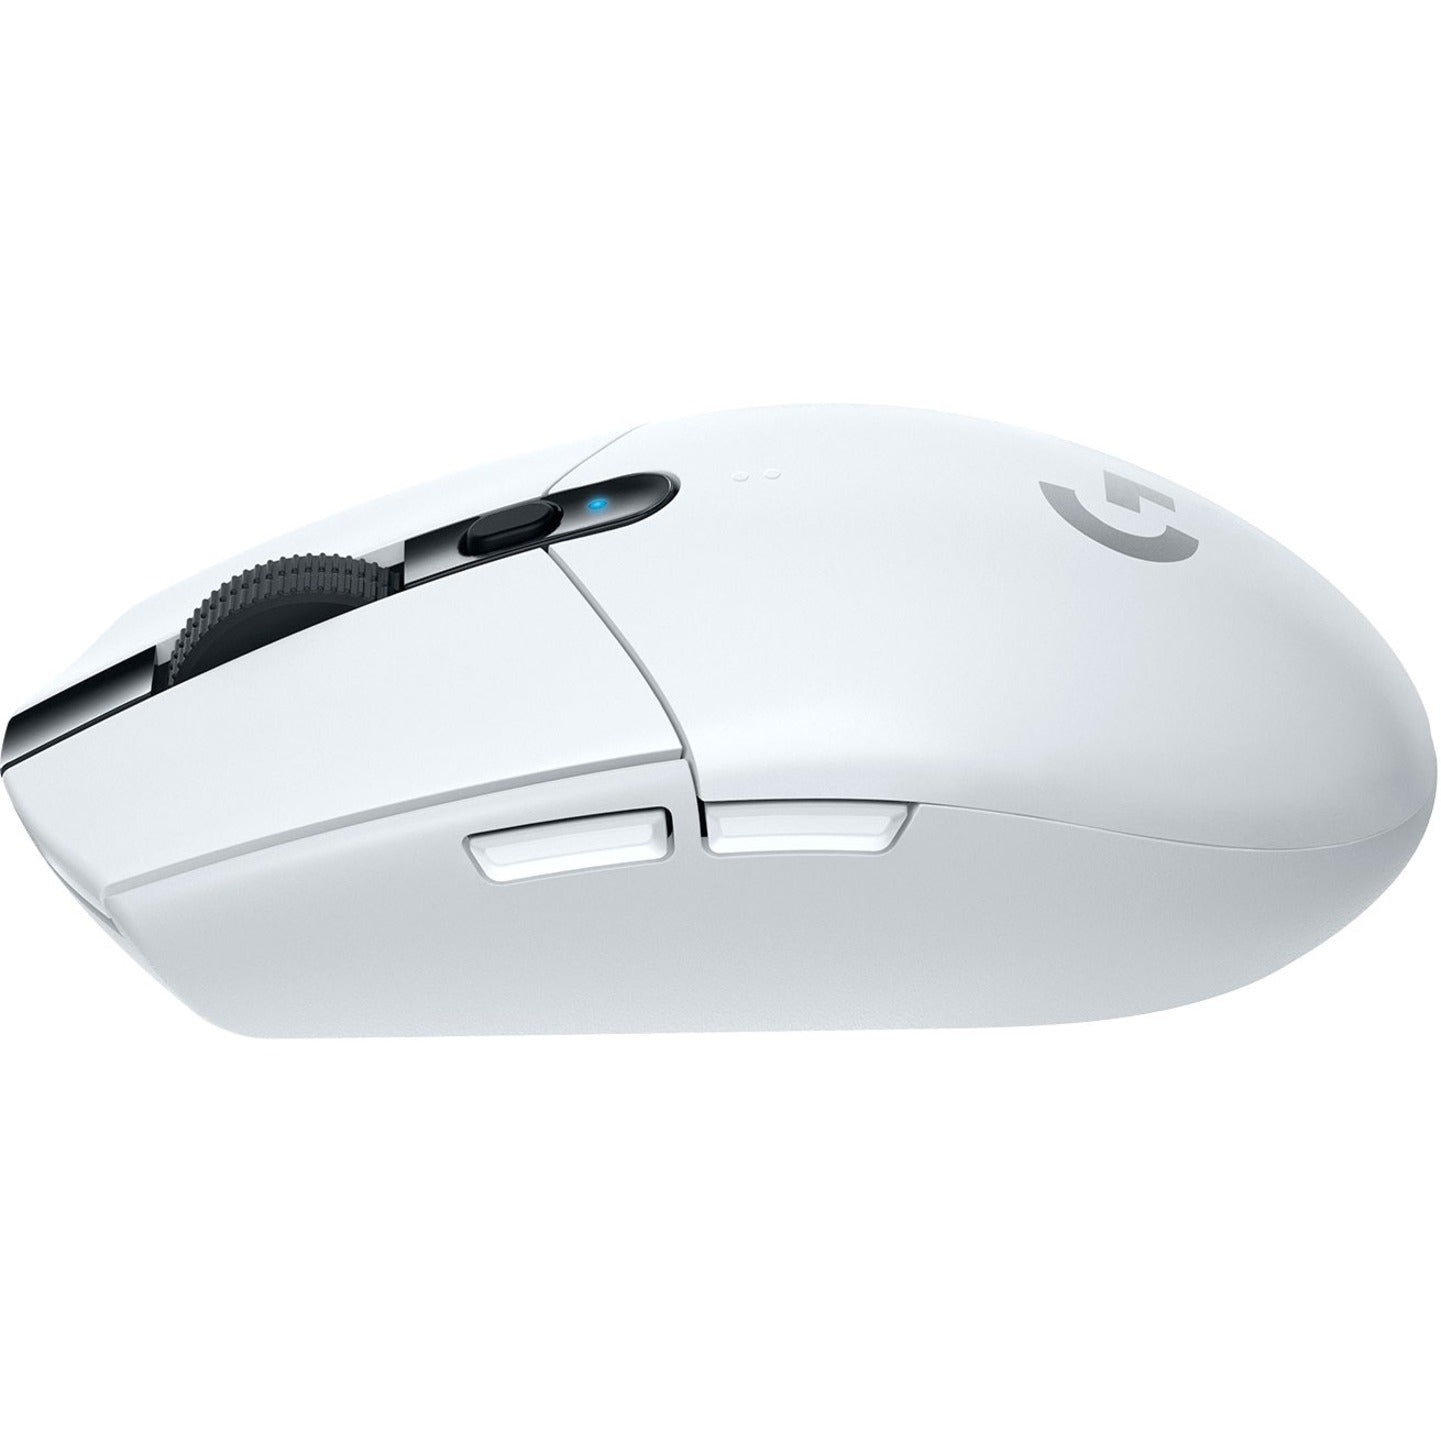 Logitech 910-005289 G305 LIGHTSPEED Wireless Gaming Mouse, 2 Year Warranty, 12000 dpi, 6 Buttons